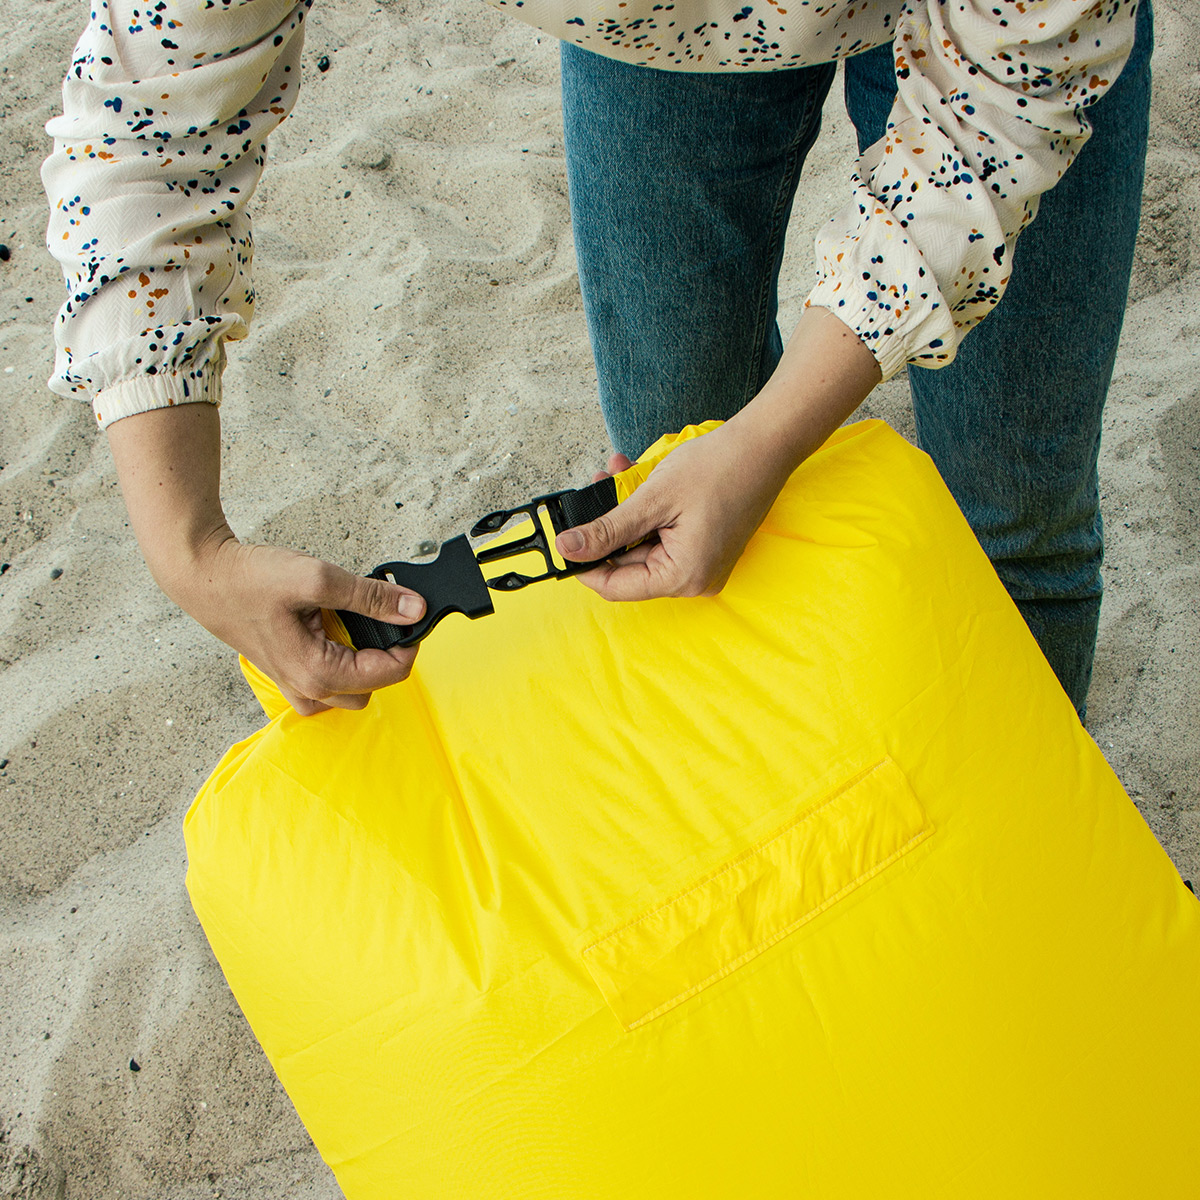 airtight sealing of the inflatable beach chair WIND SAC